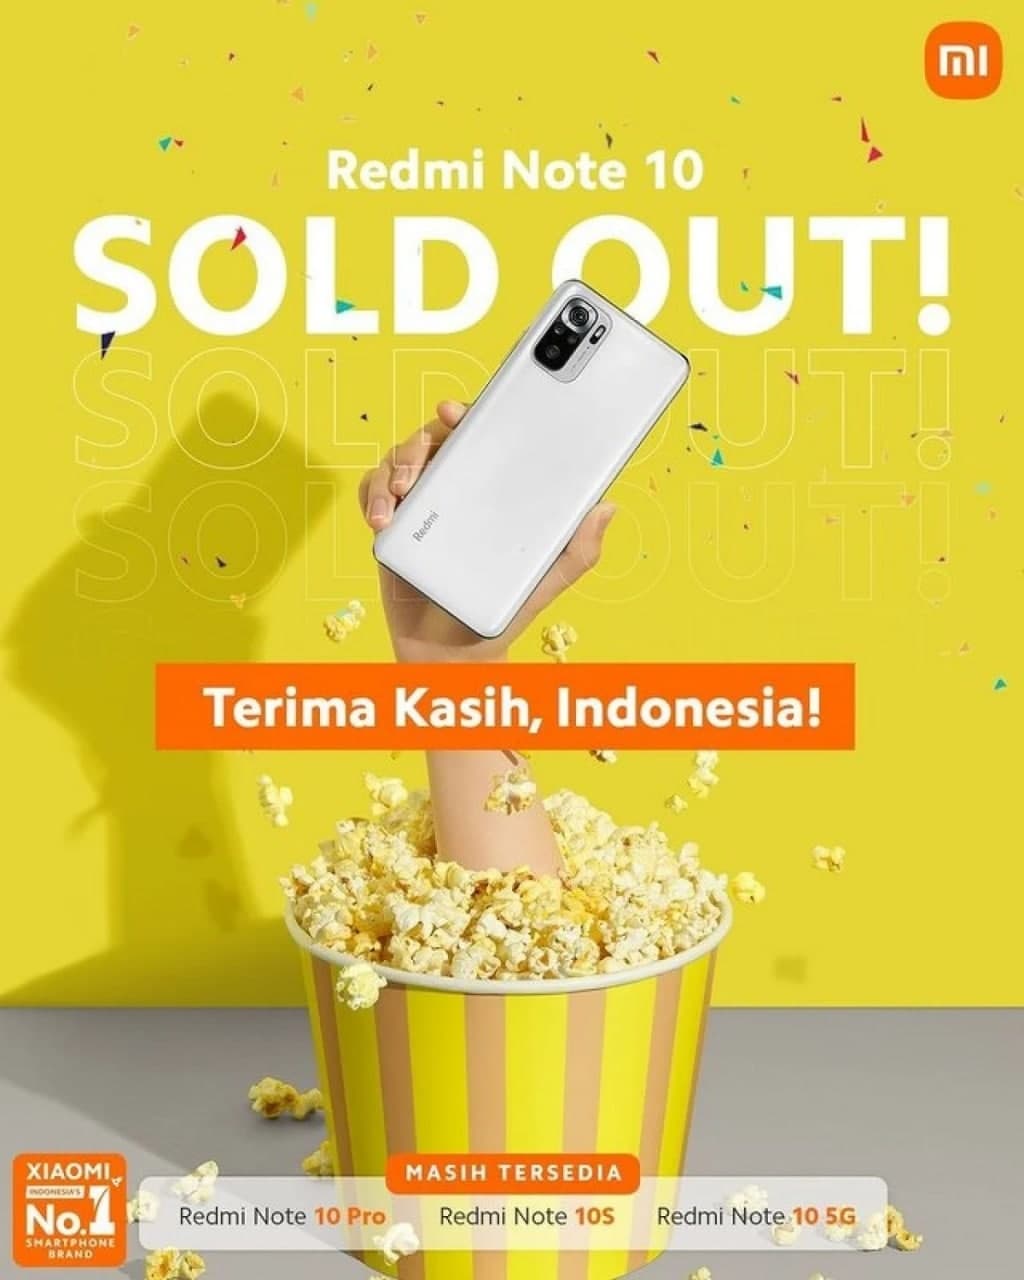 Redmi Note 10 Discontinued